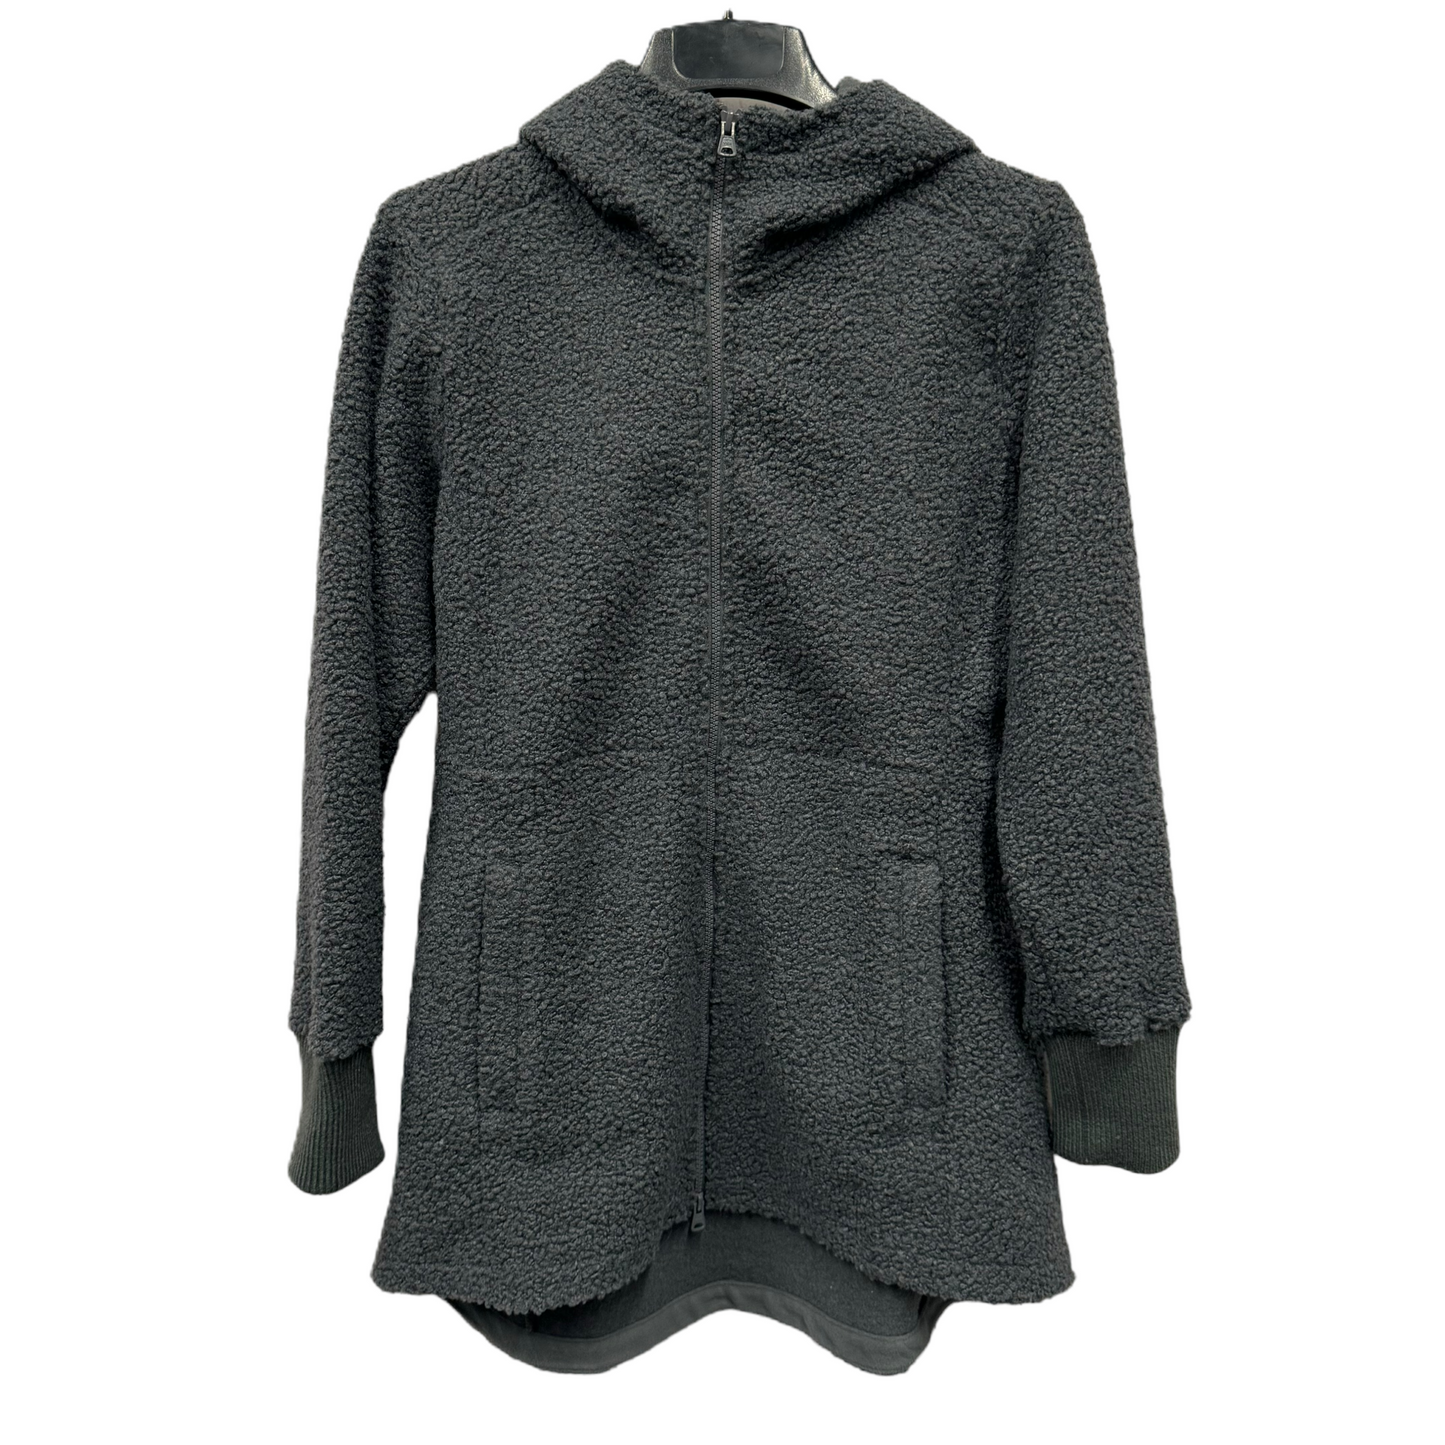 Jacket Fleece By Lands End  Size: M